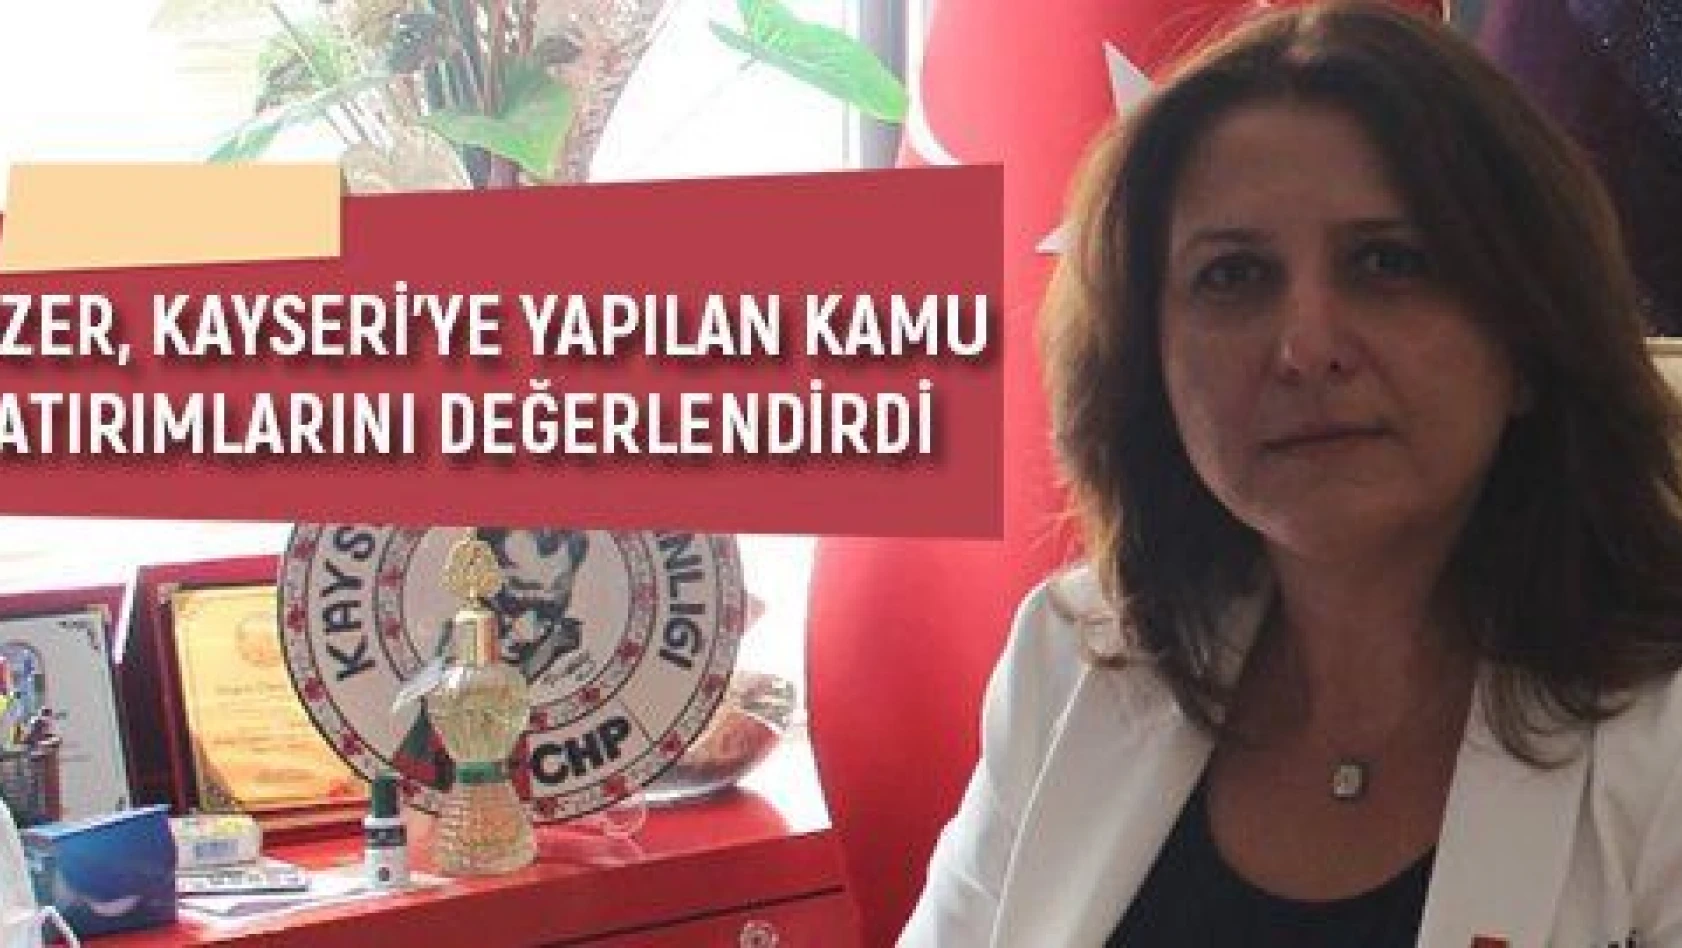 'AKP GENEL BAŞKANINI AKP'DE YALANLADI'